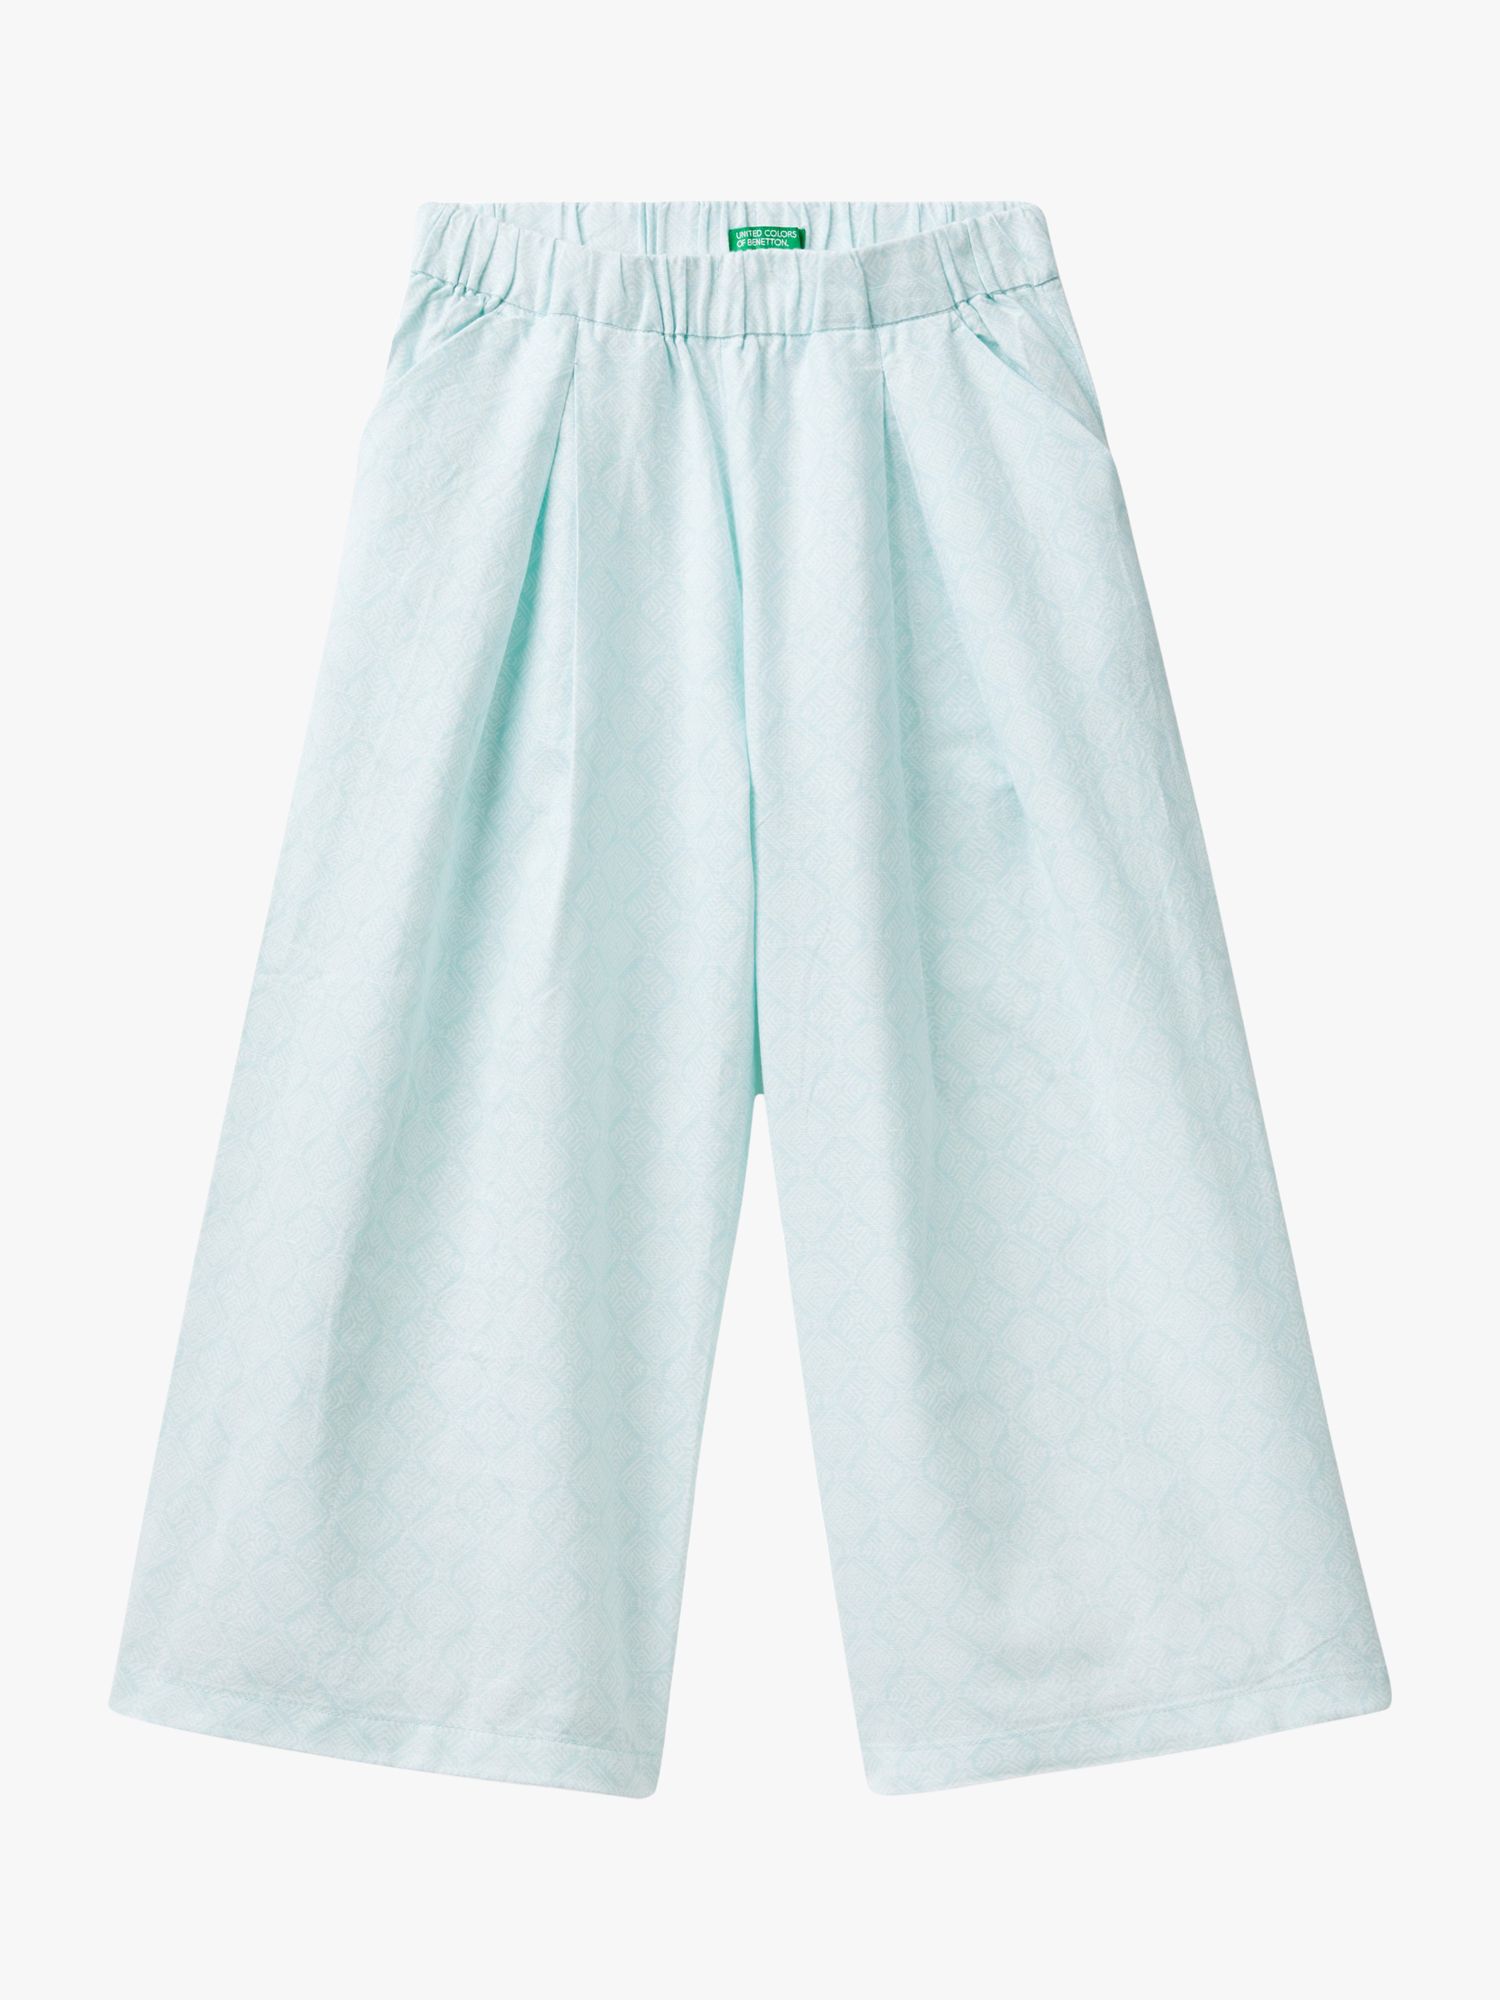 Benetton Kids' Linen Blend Geometric Print Wide Leg Trousers, Aqua/Multi, 6-7 years